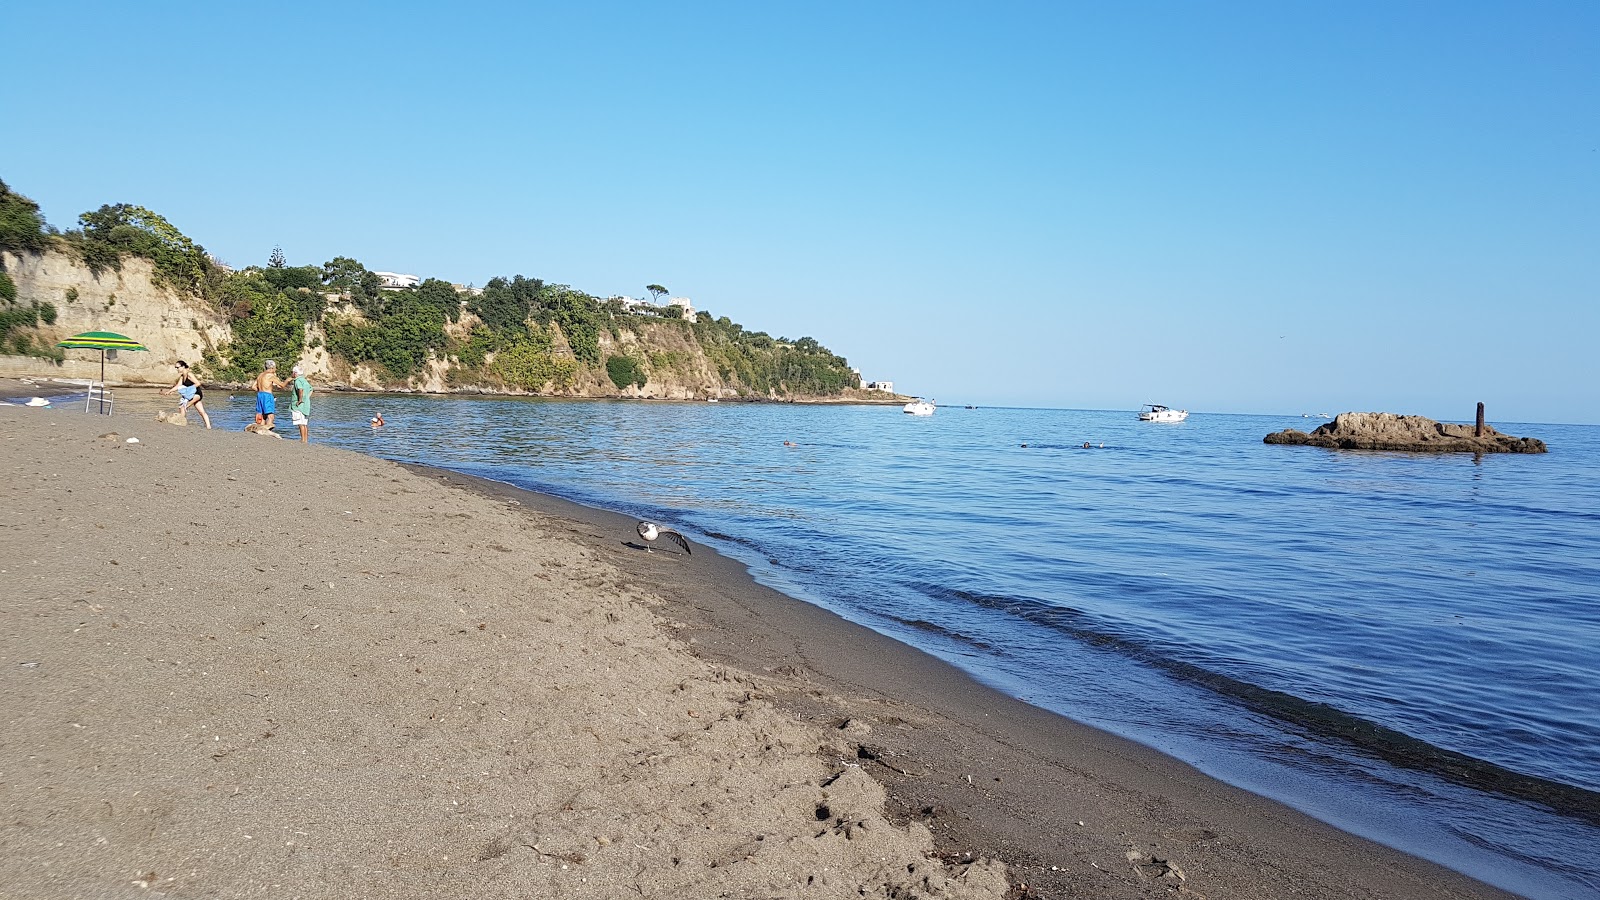 Photo of Spiaggia di Silurenza with spacious bay